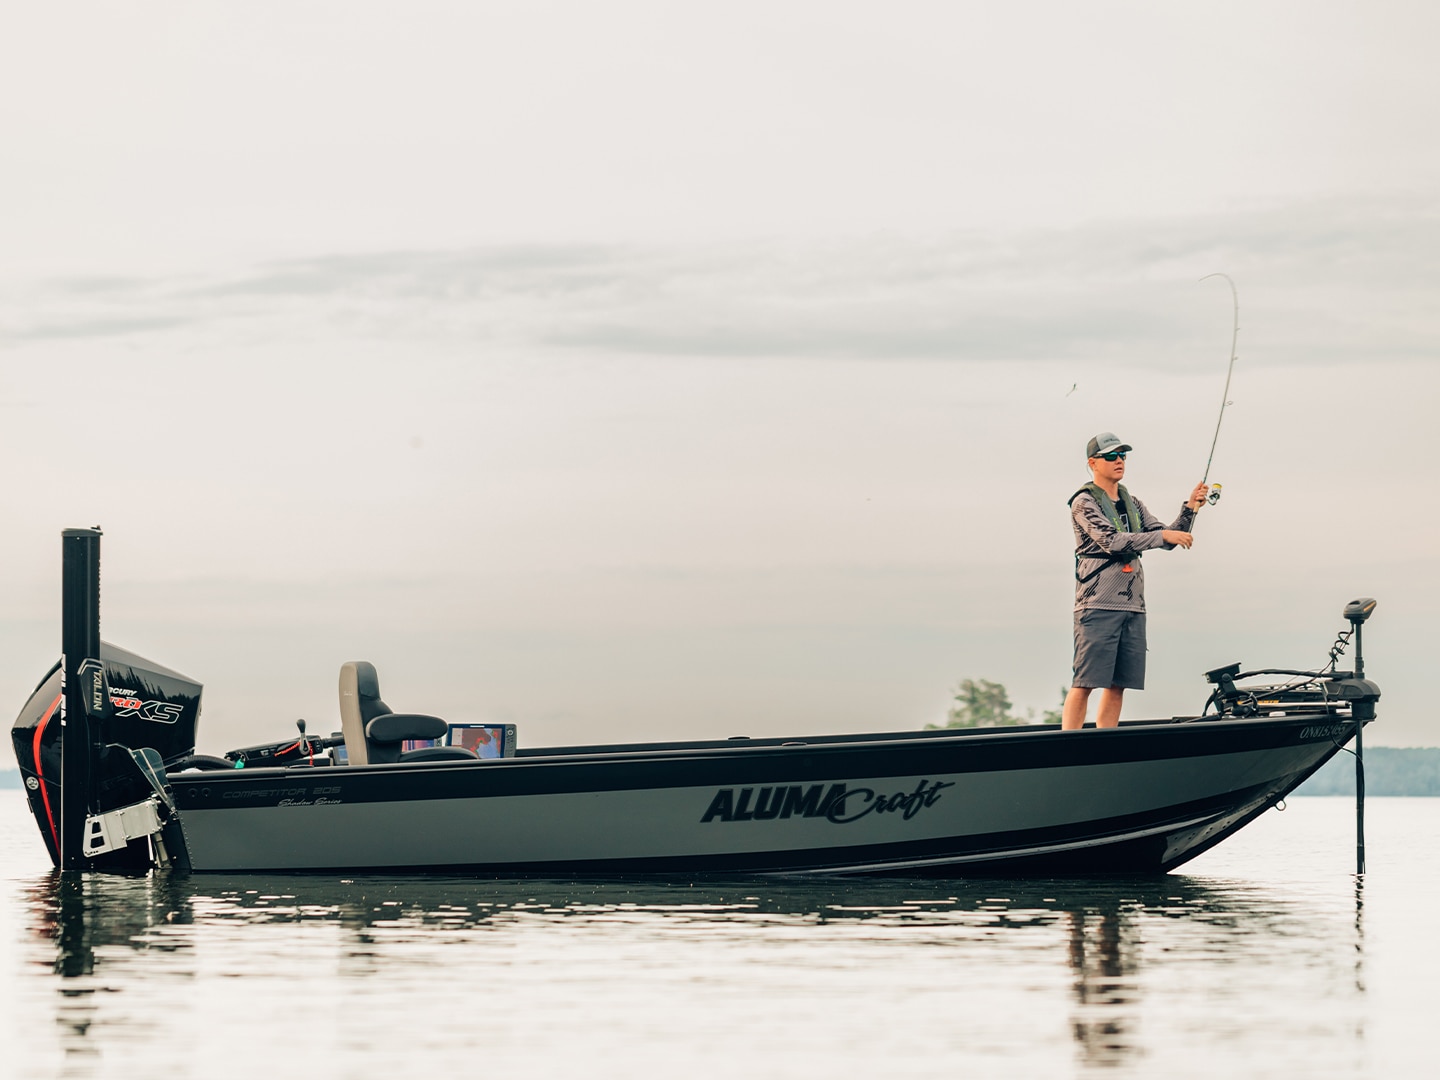 Jay Siemens fishing on his Alumacraft aluminum boat